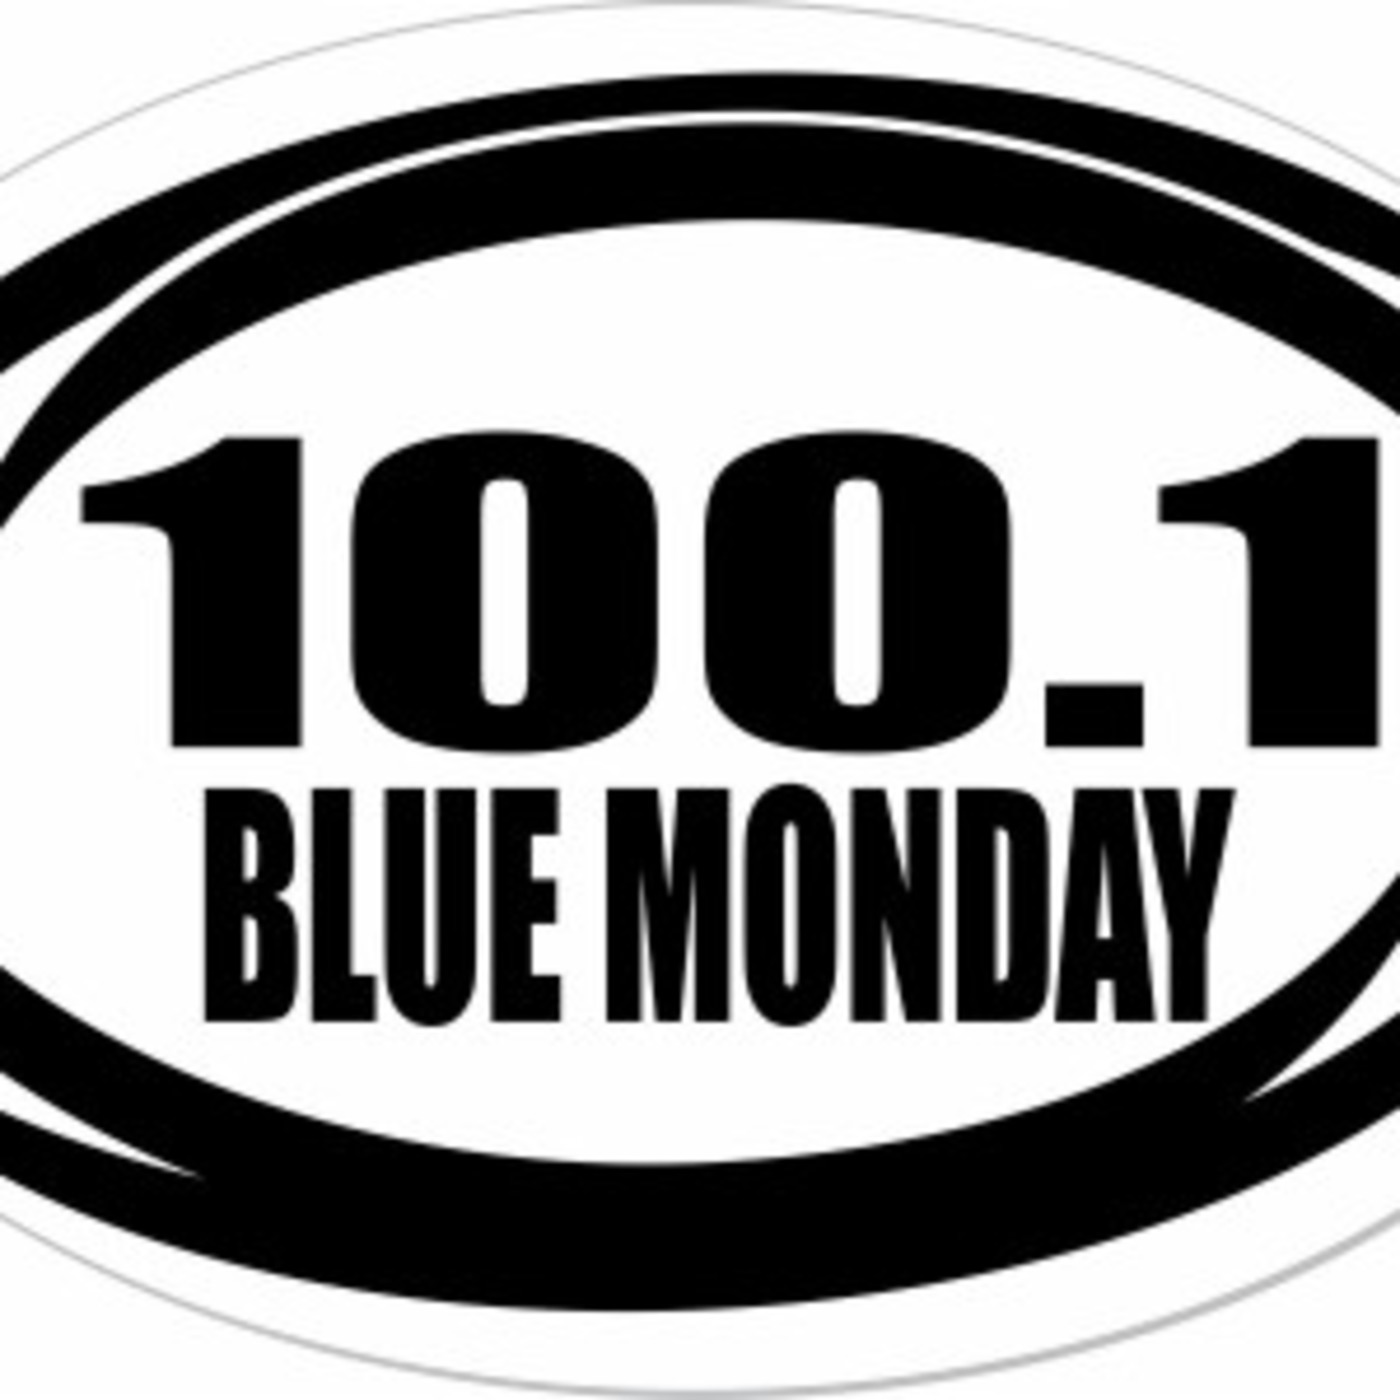 Blue Monday 5-14-2012